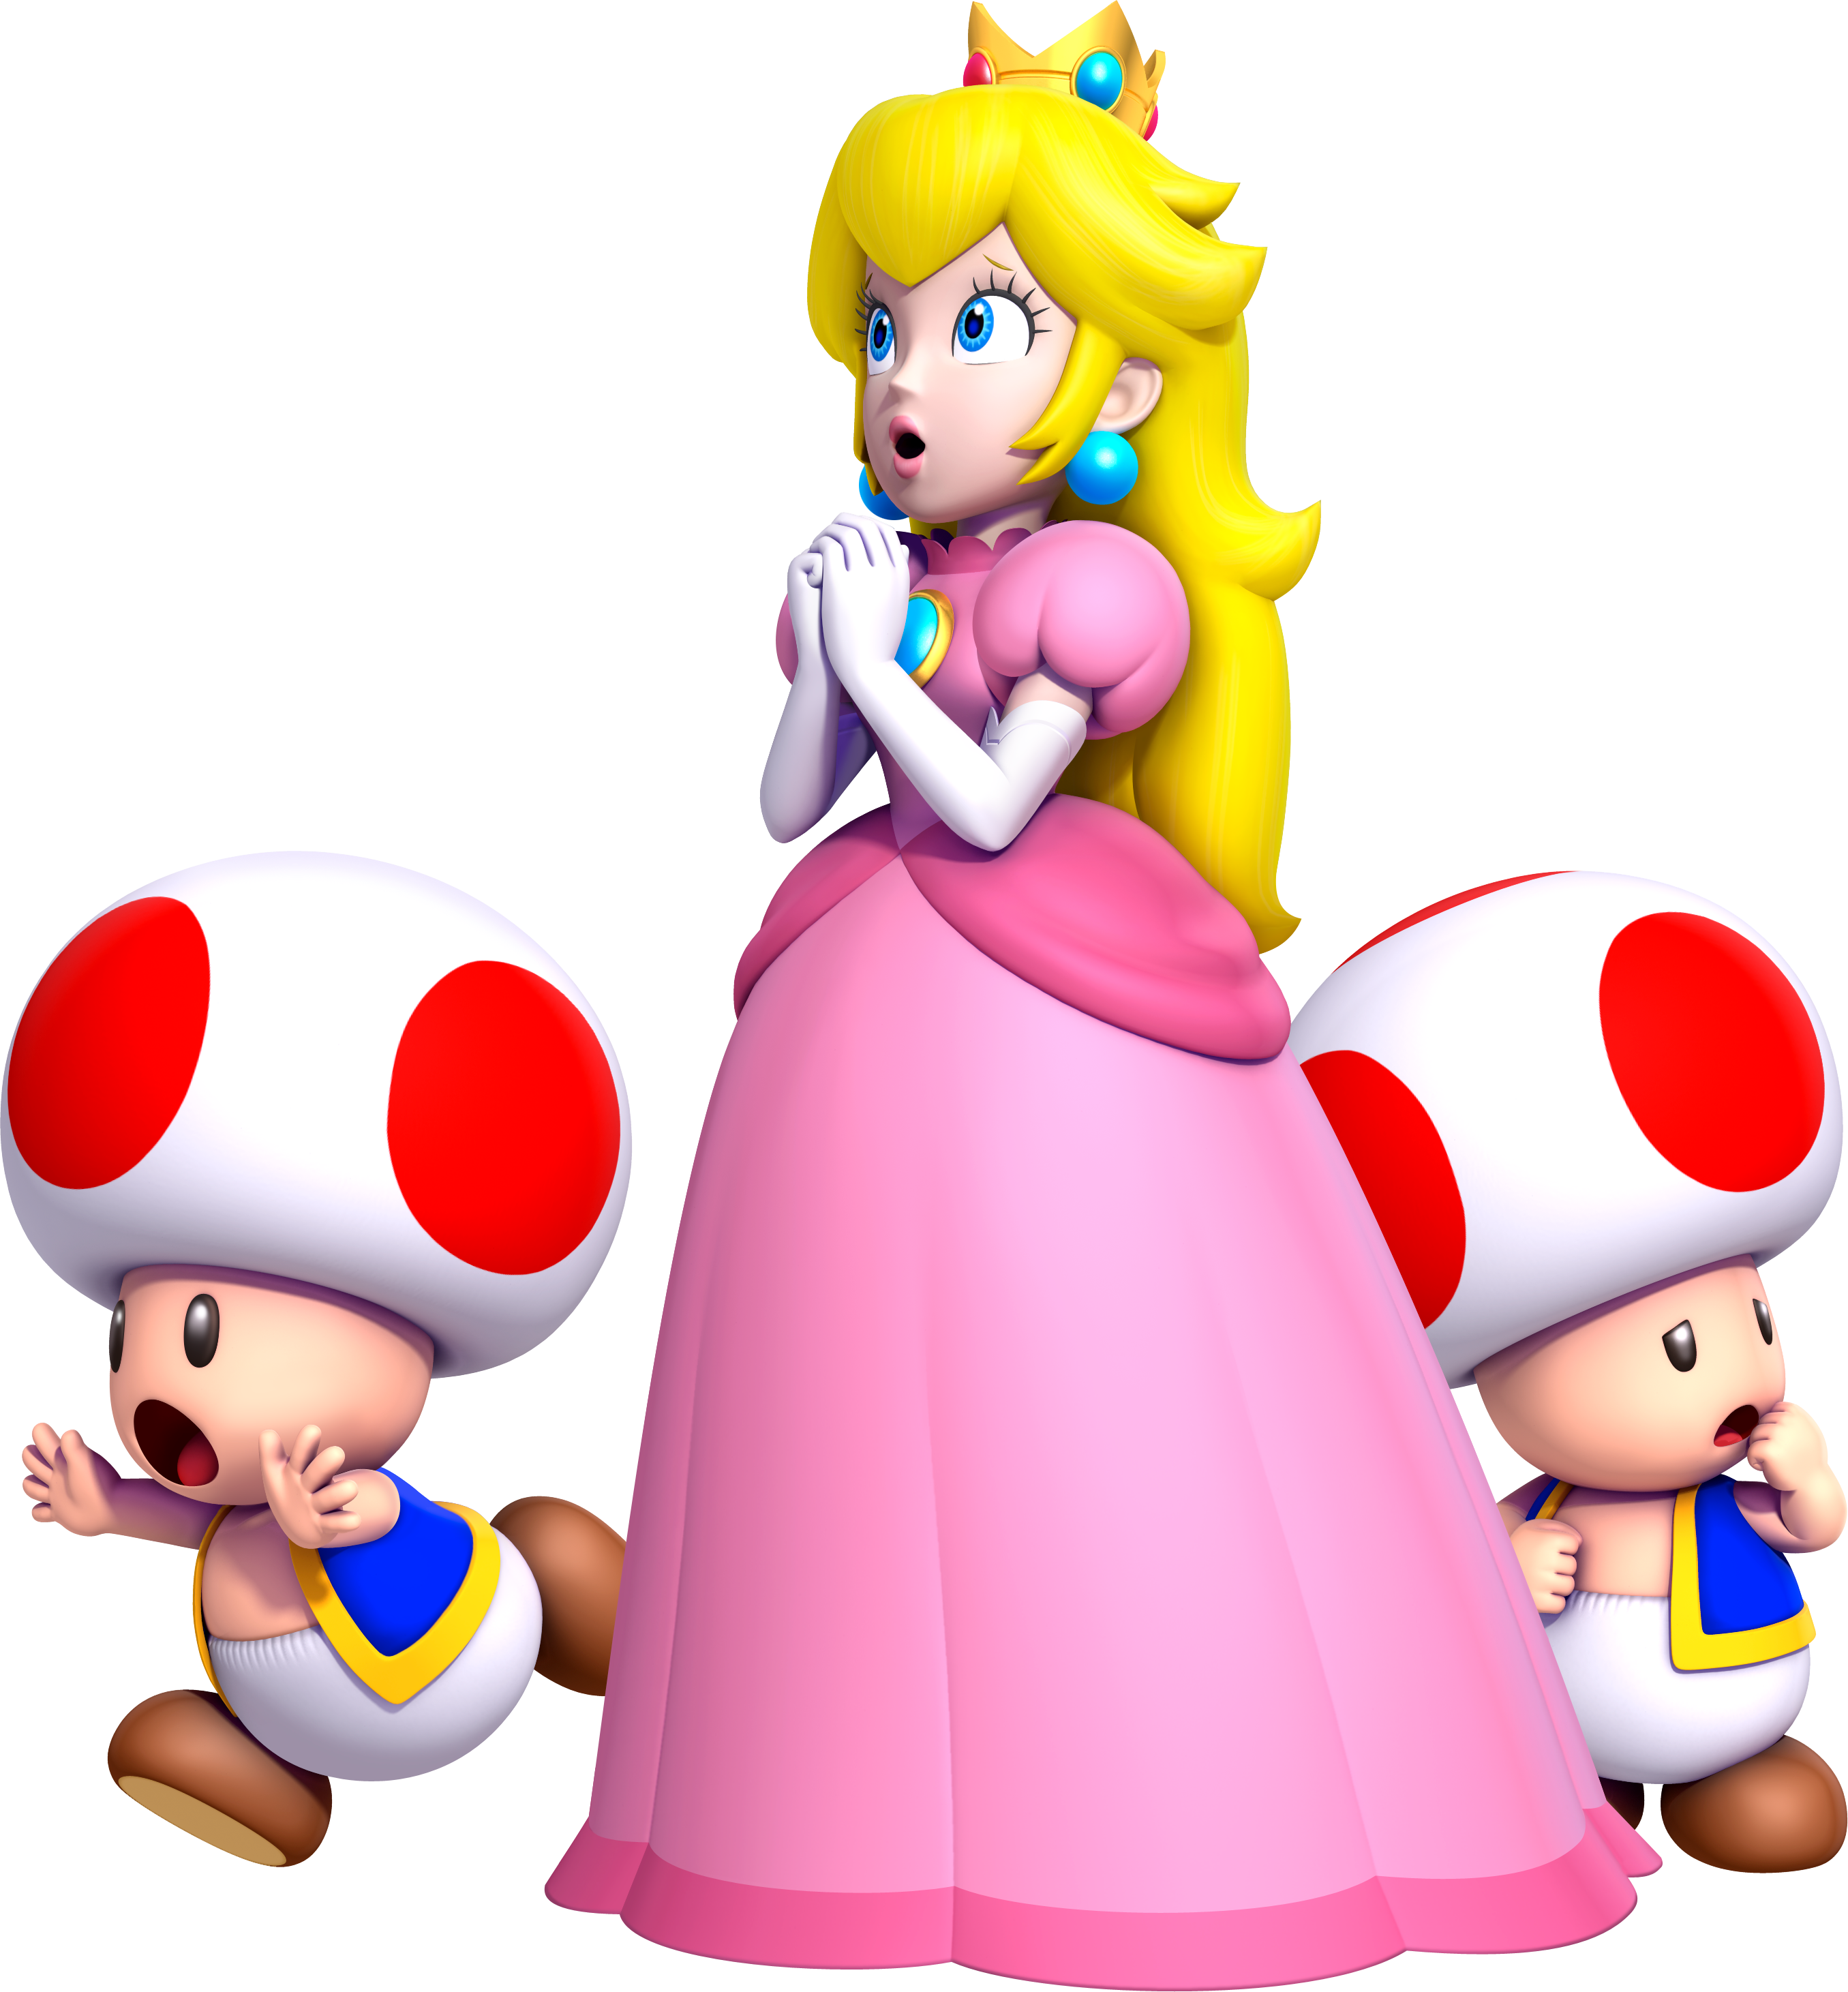 Peach in Super Mario Bros. Wonder! #princesspeach #peach #princesstoadstool  #mario #supermario #mariobros #supermariobros #nintendo…